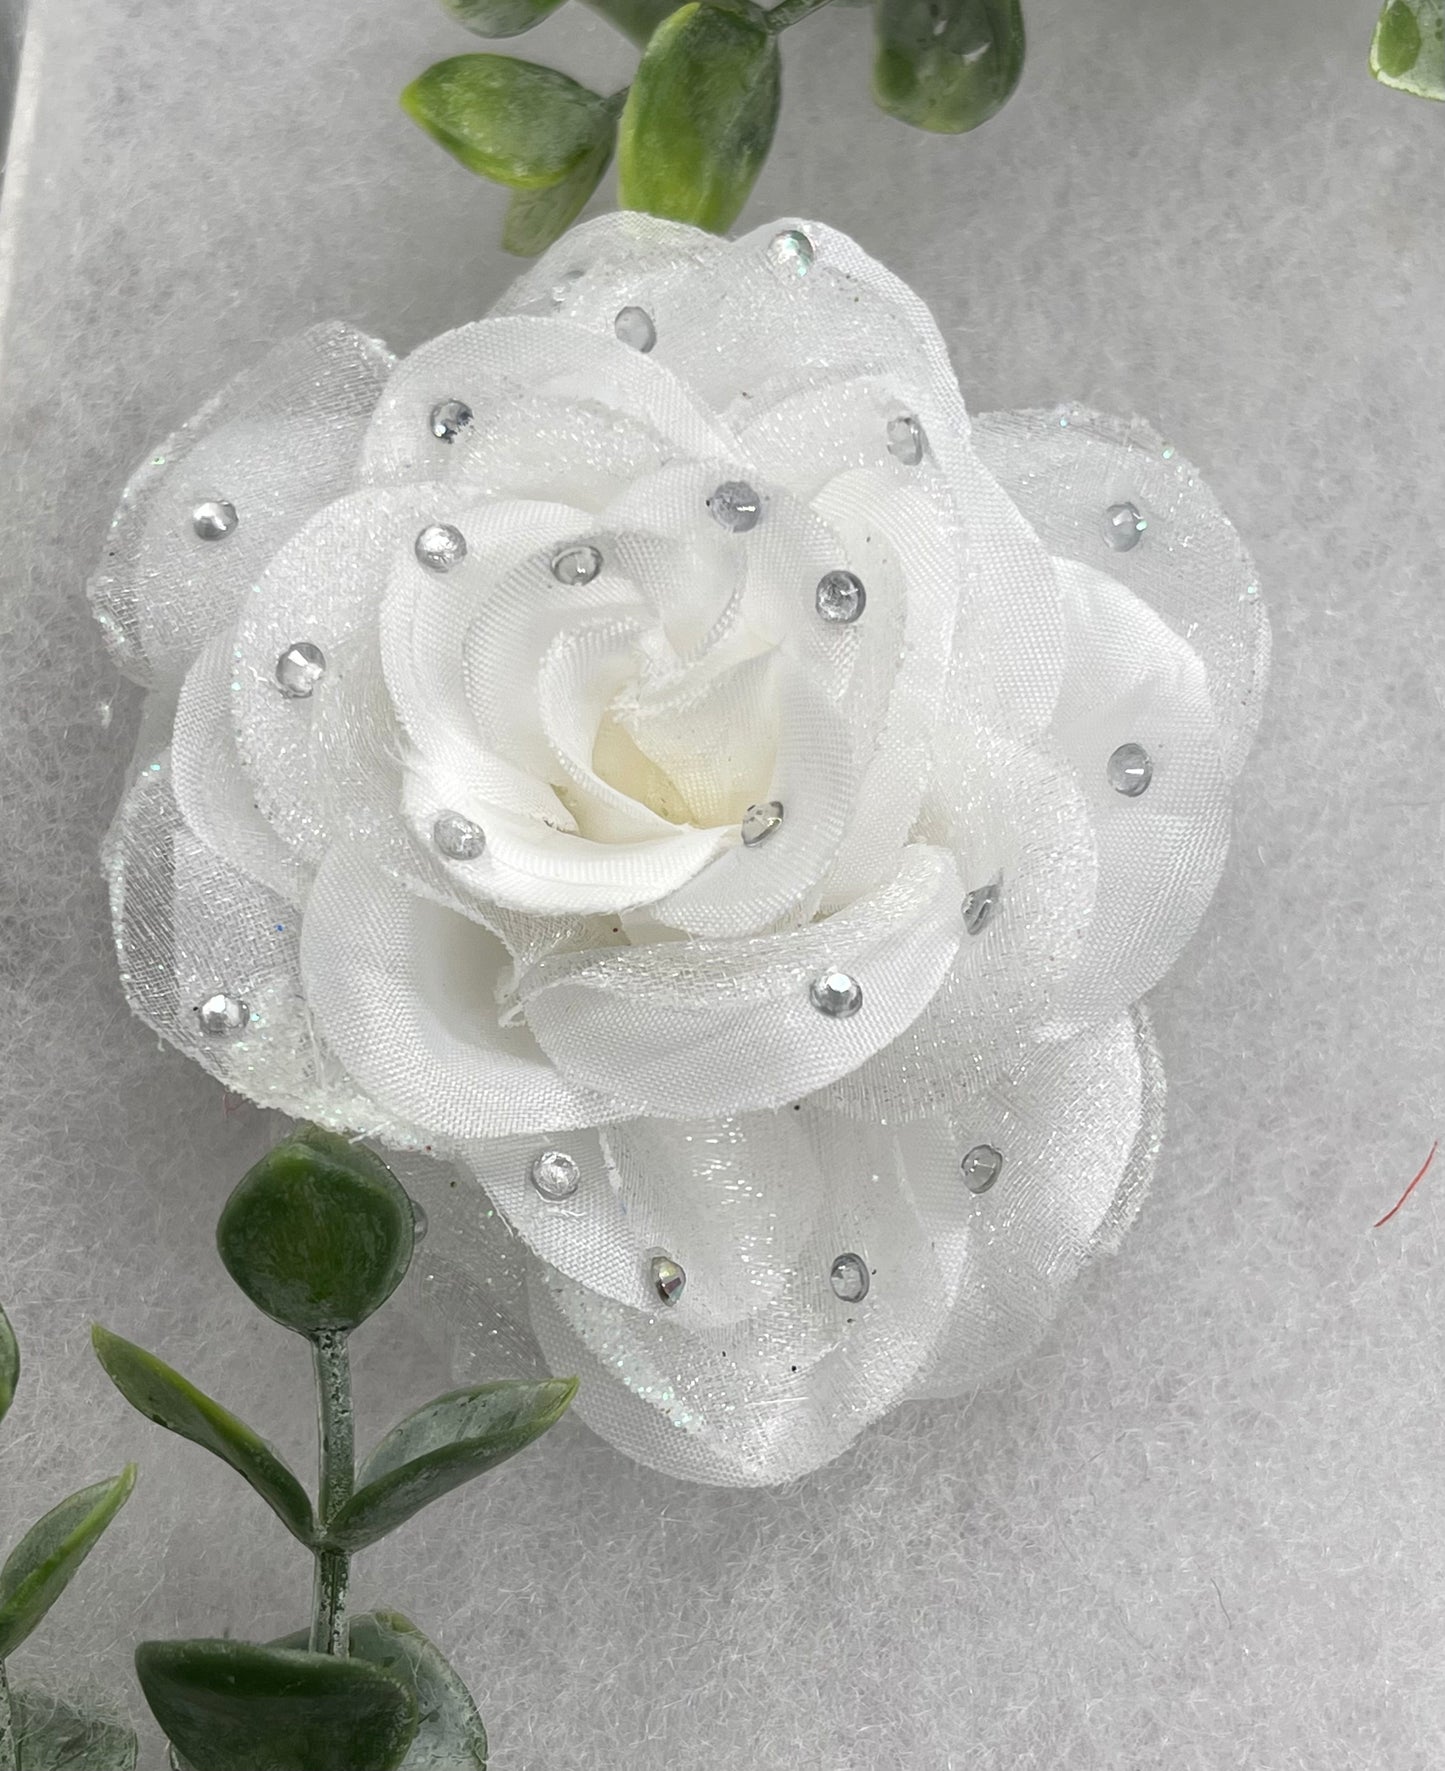 White Rose flower crystal rhinestone embellished alligator clip approximately 3.0” formal hair accessory wedding